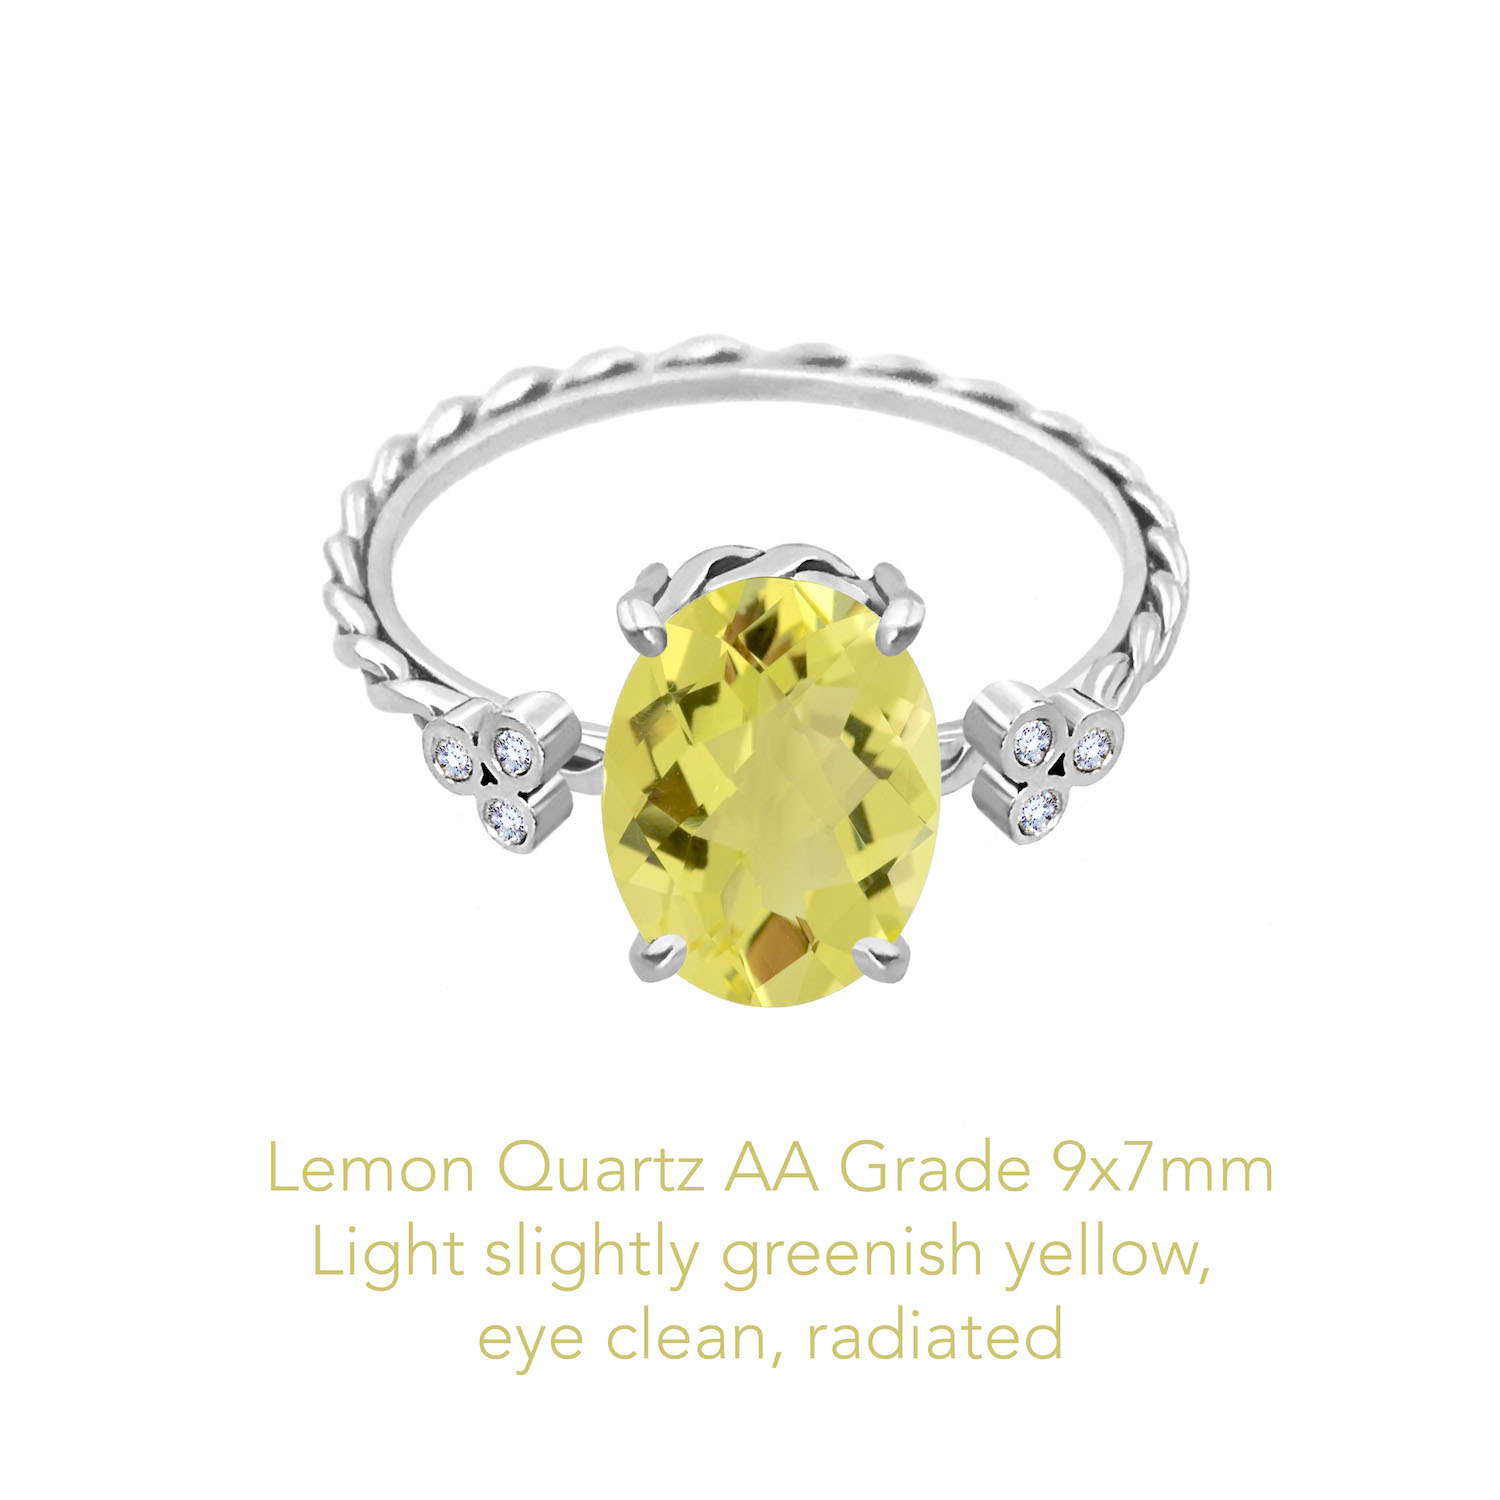 Quartz Lemon AA 9x7 WG